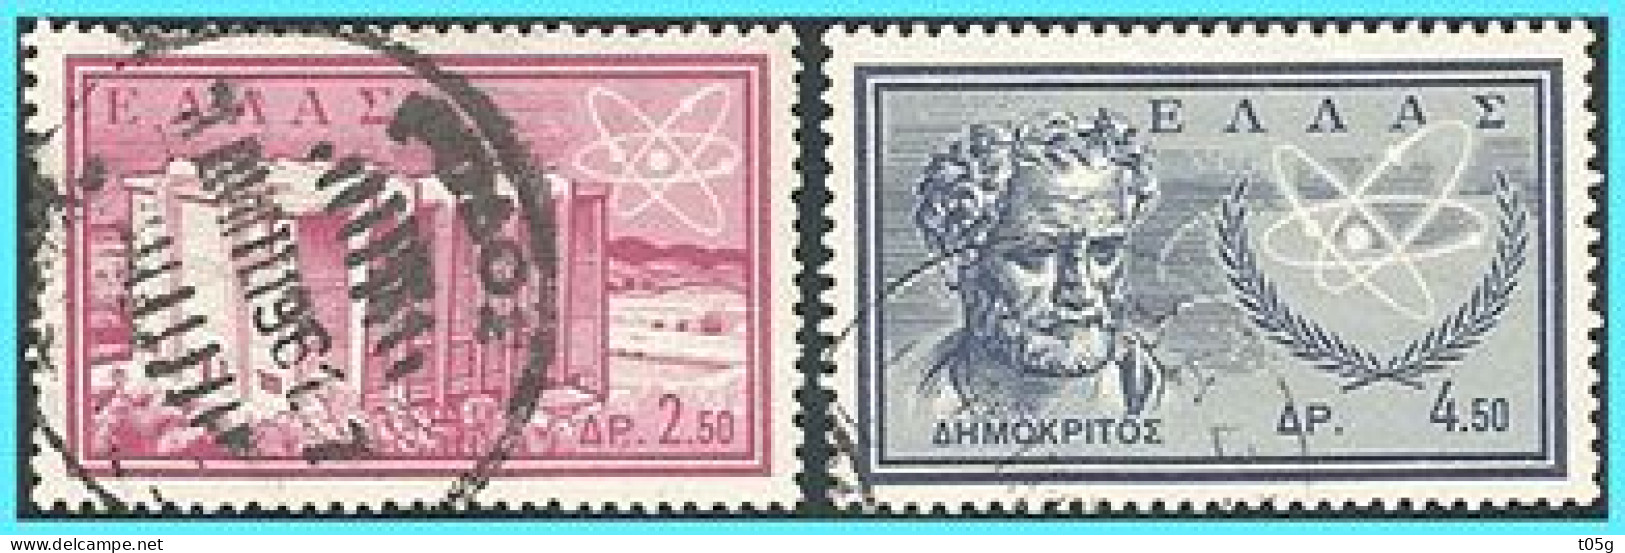 GREECE-GRECE- HELLAS 1961: "Democritus"  Compl. Set Used - Used Stamps